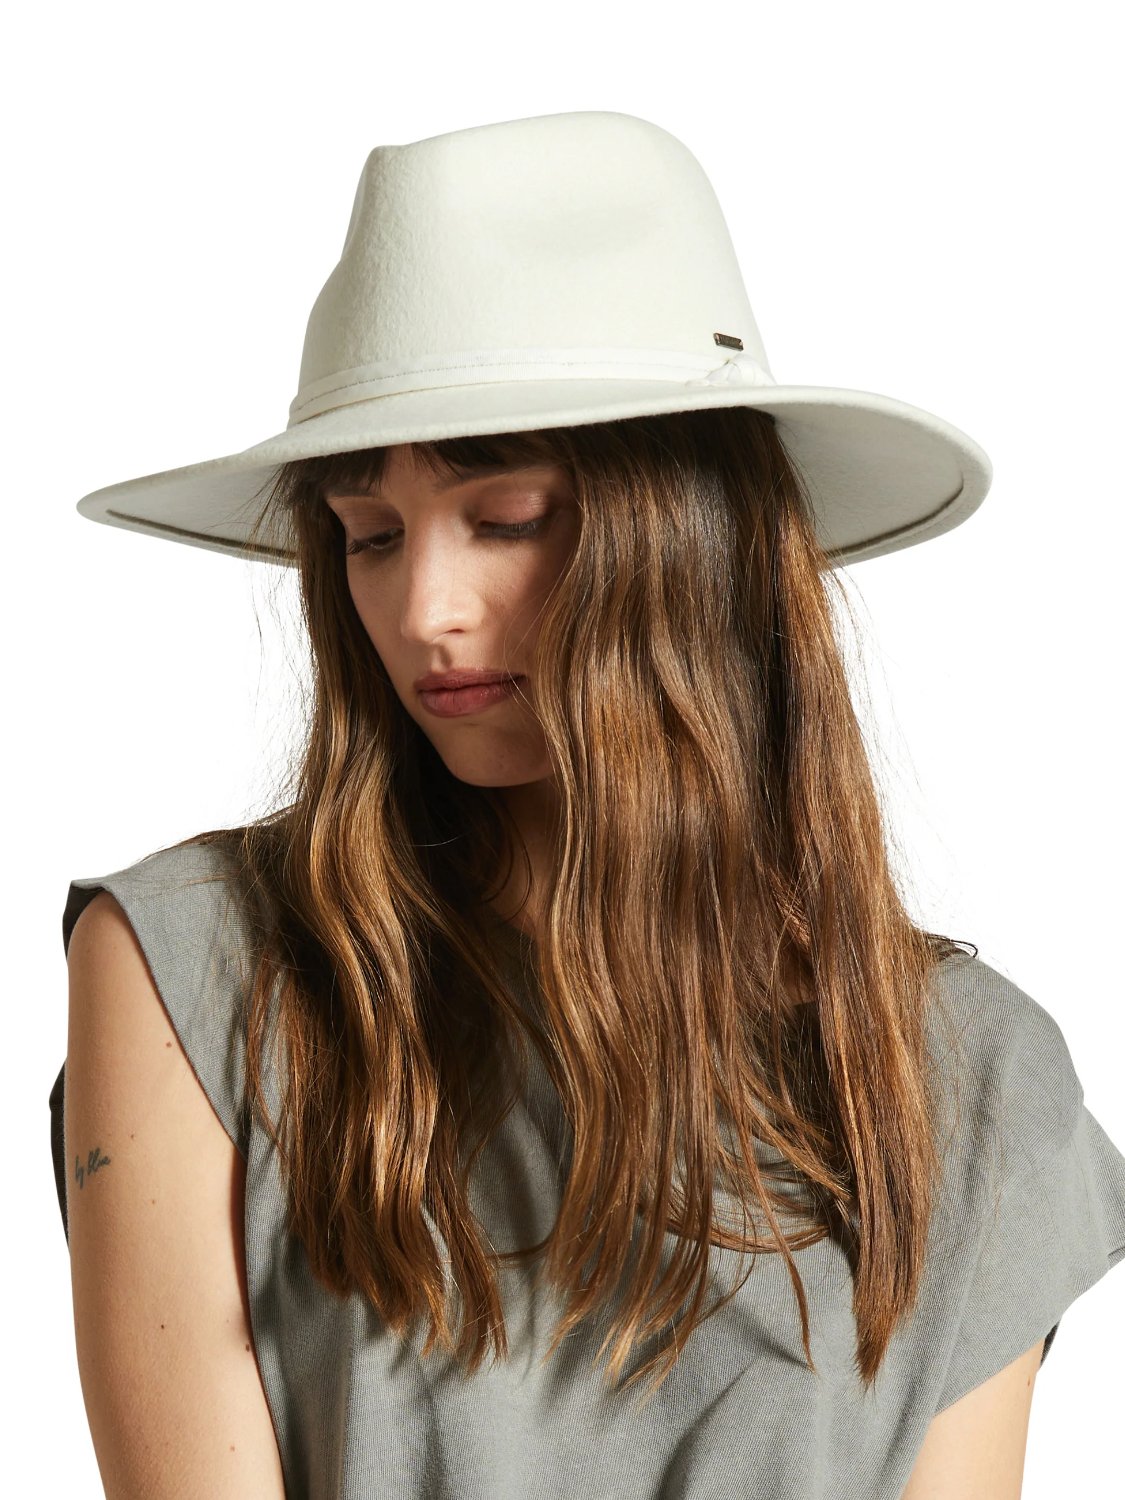 Brixton Joanna Felt Packable Hat OFF White / S